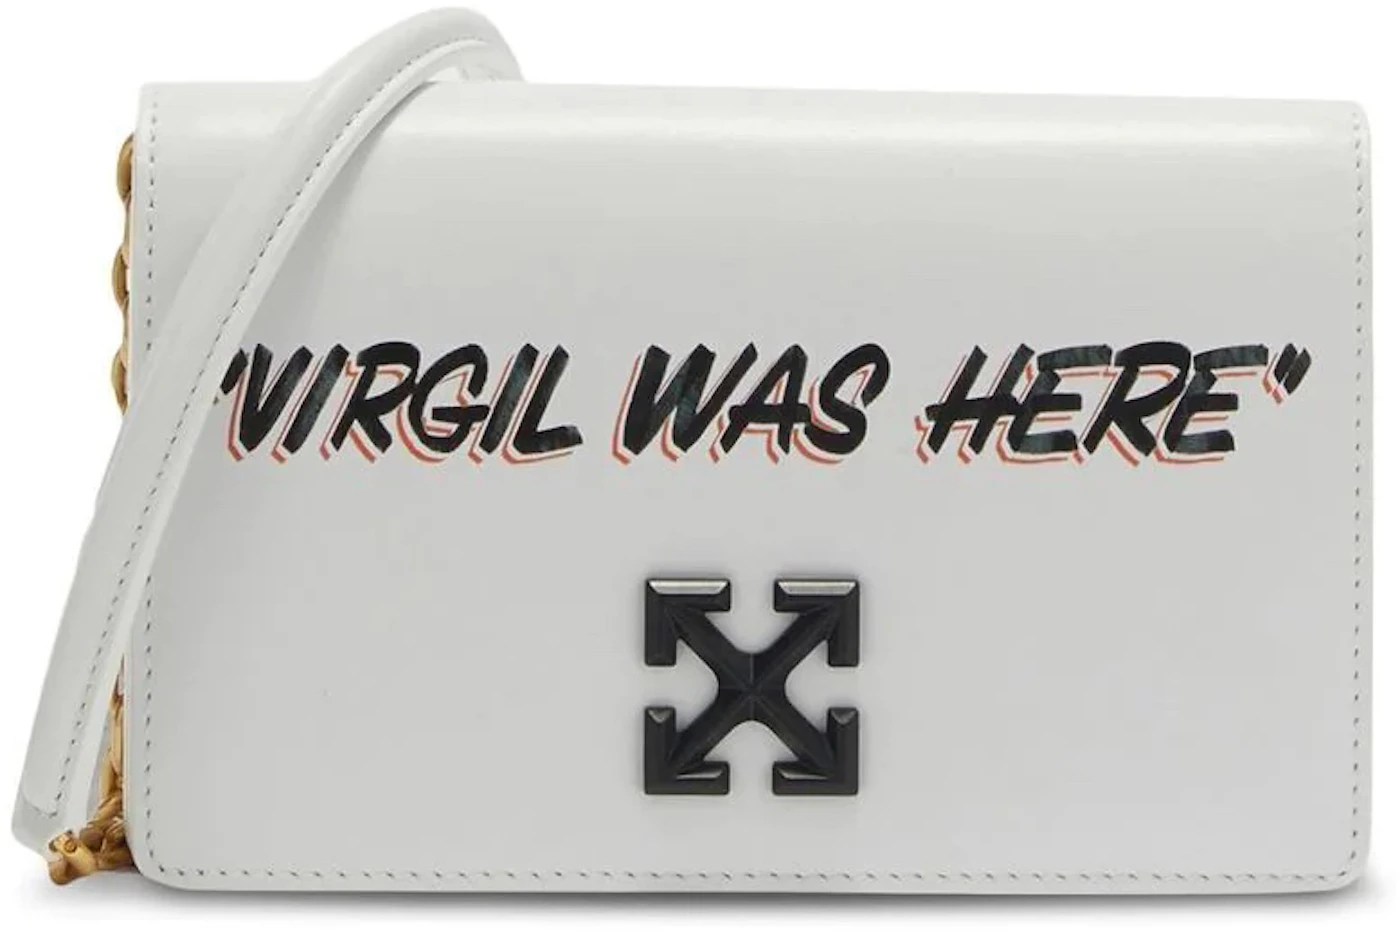 OFF-WHITE, Jitney 1.4 Leather Shoulder Bag - Virgil Was Here